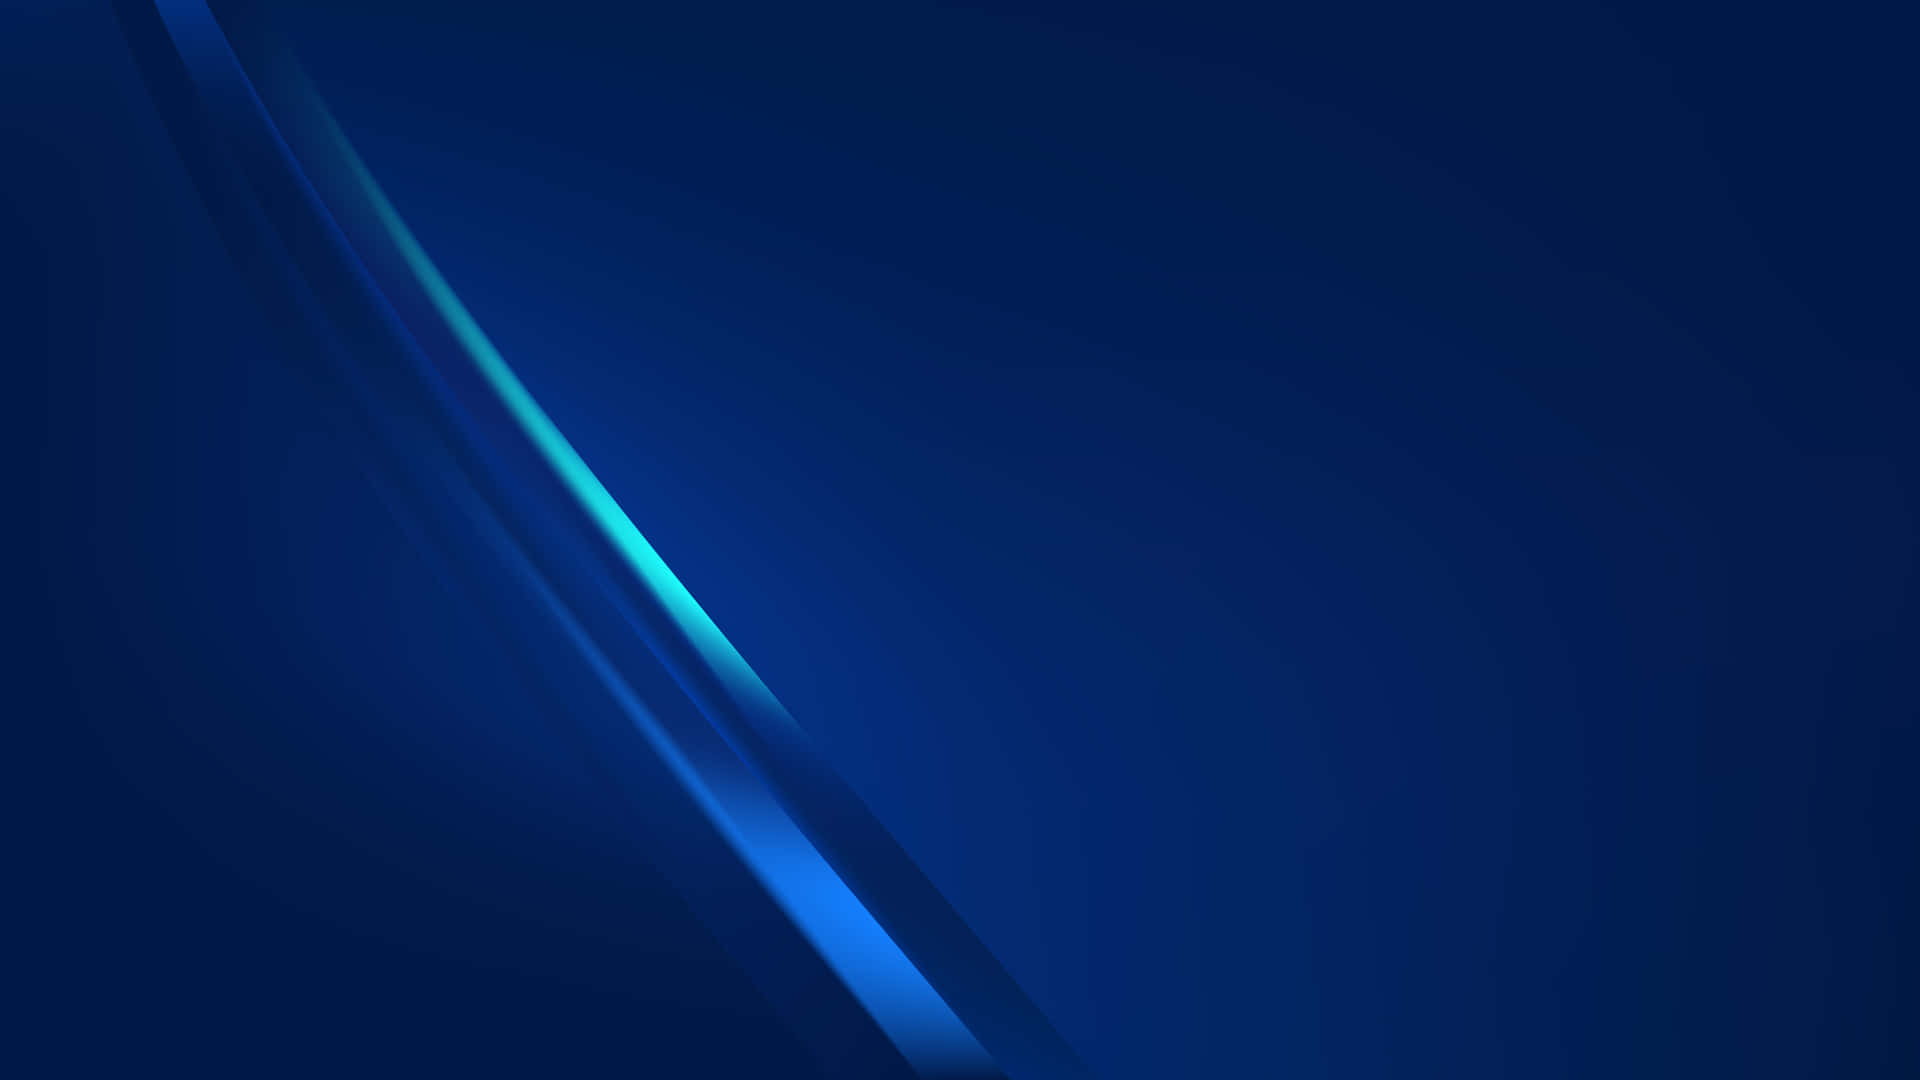 Navy Blue Background With Luminous Flare